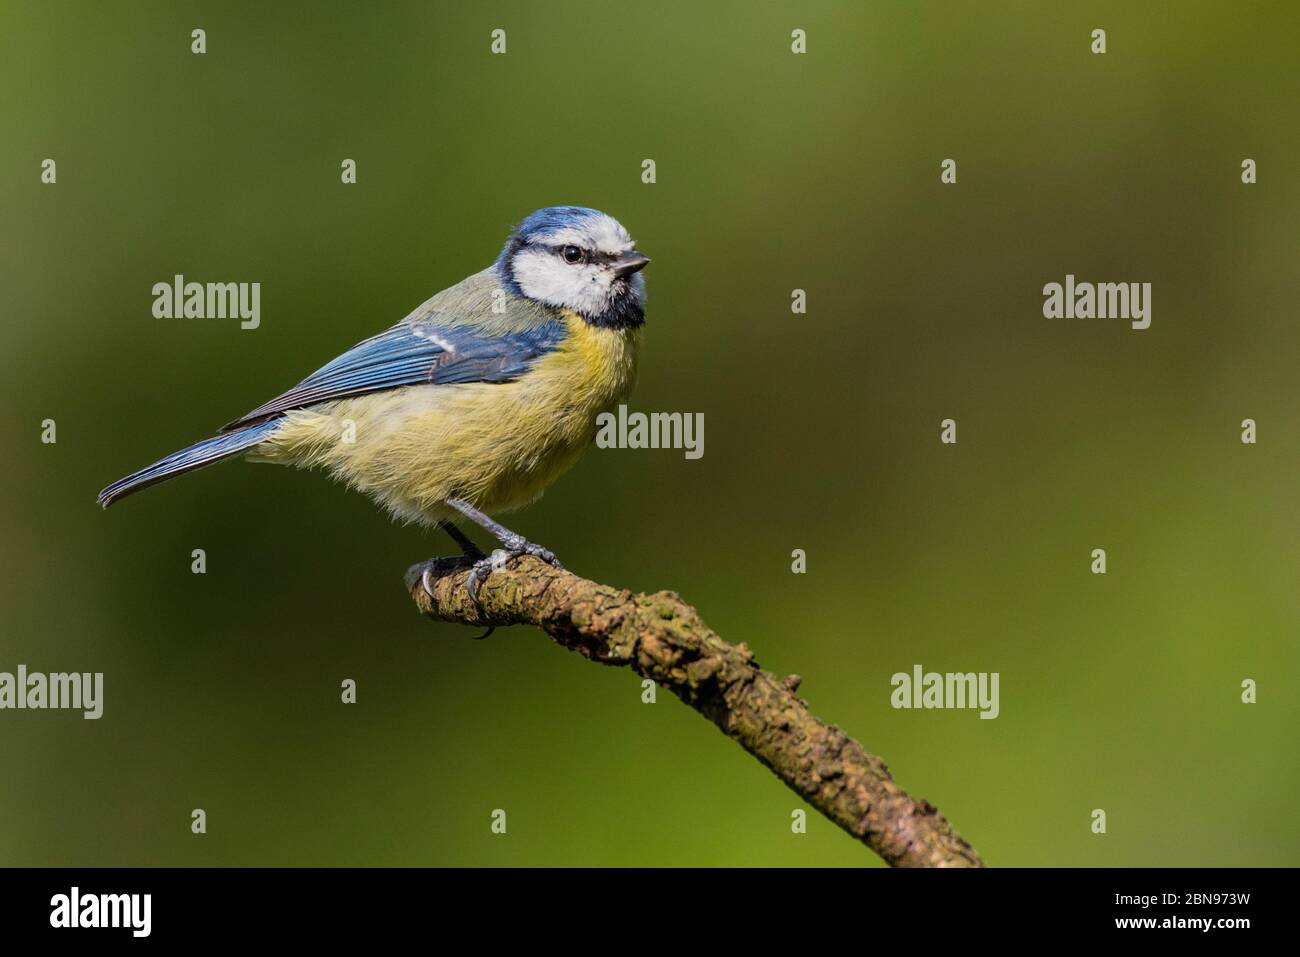 A Blue Tit (Parus caeruleus) in the uk Stock Photo